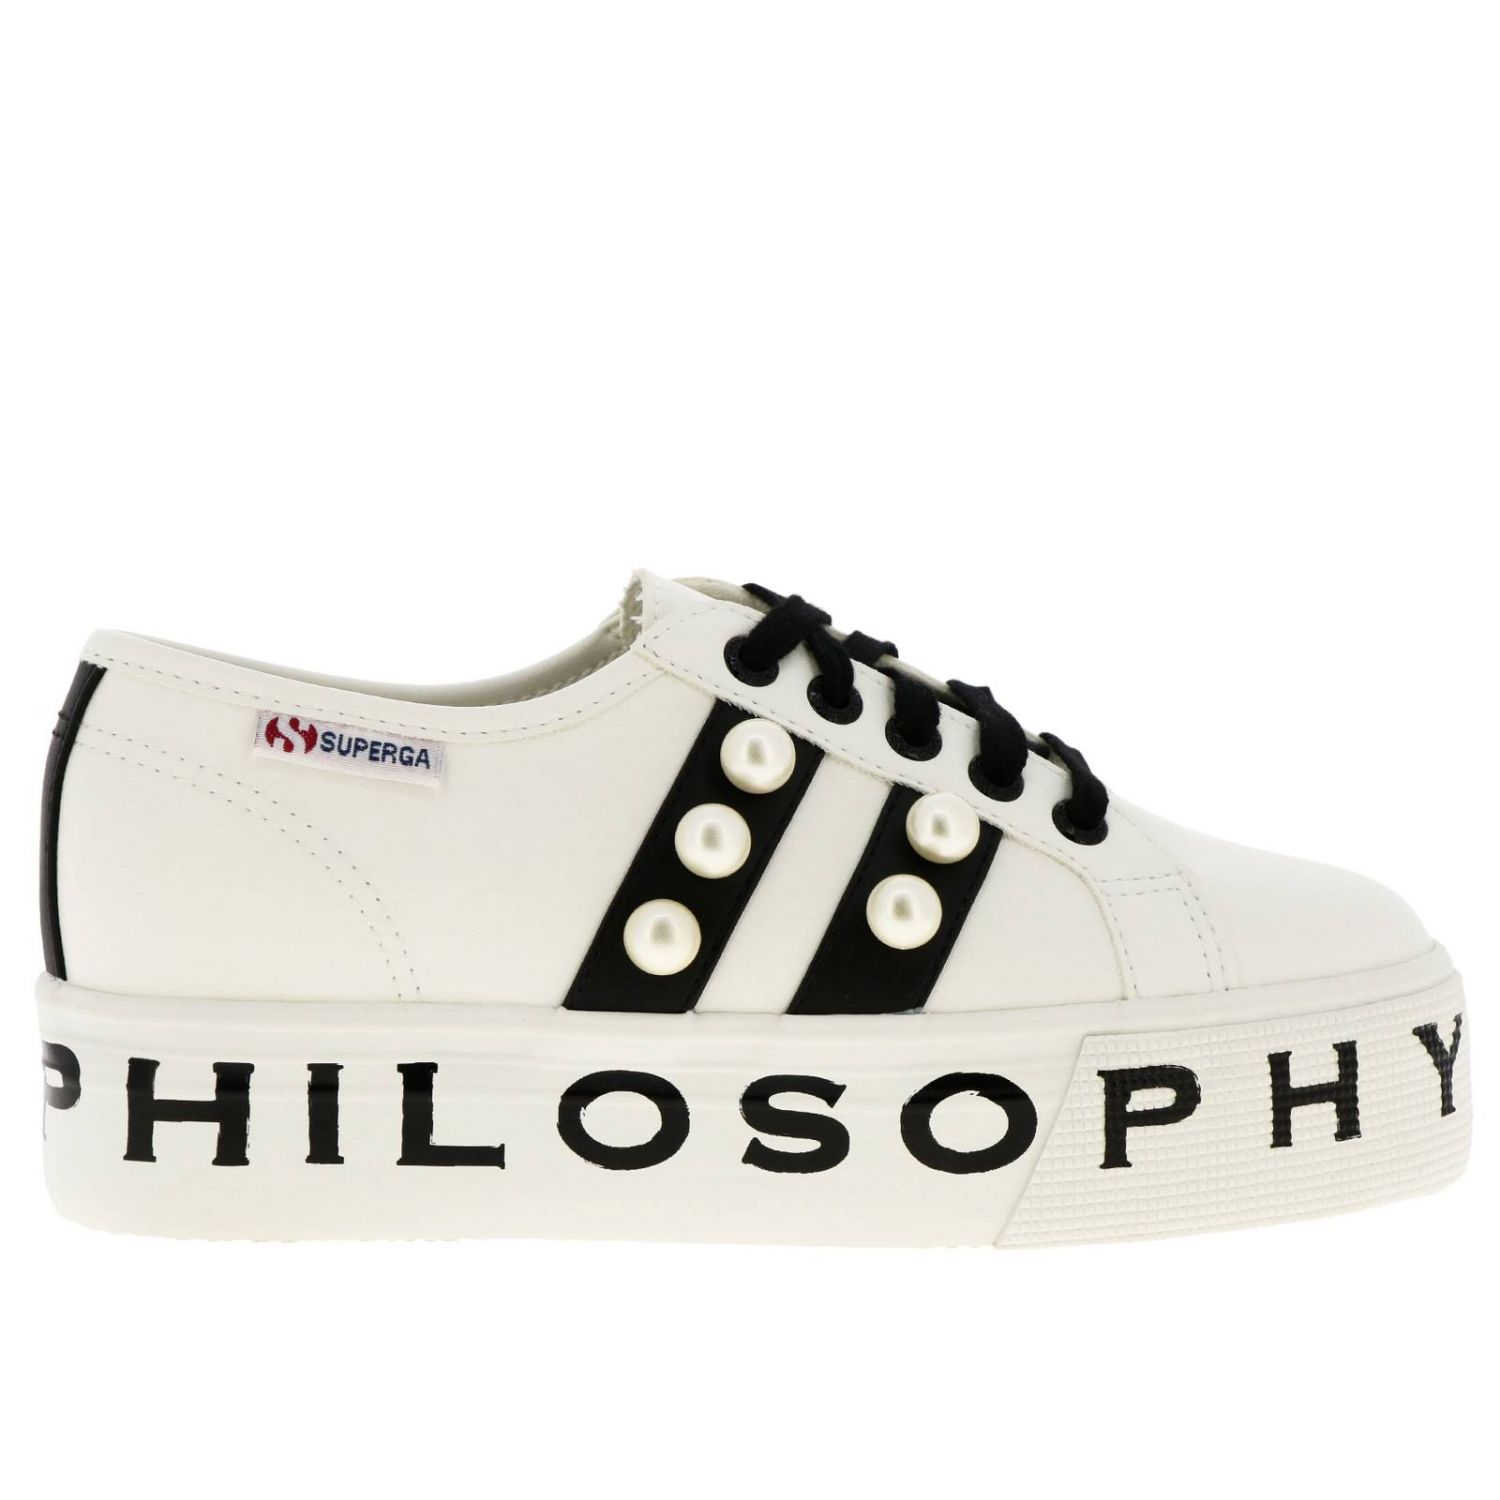 sneakers philosophy superga